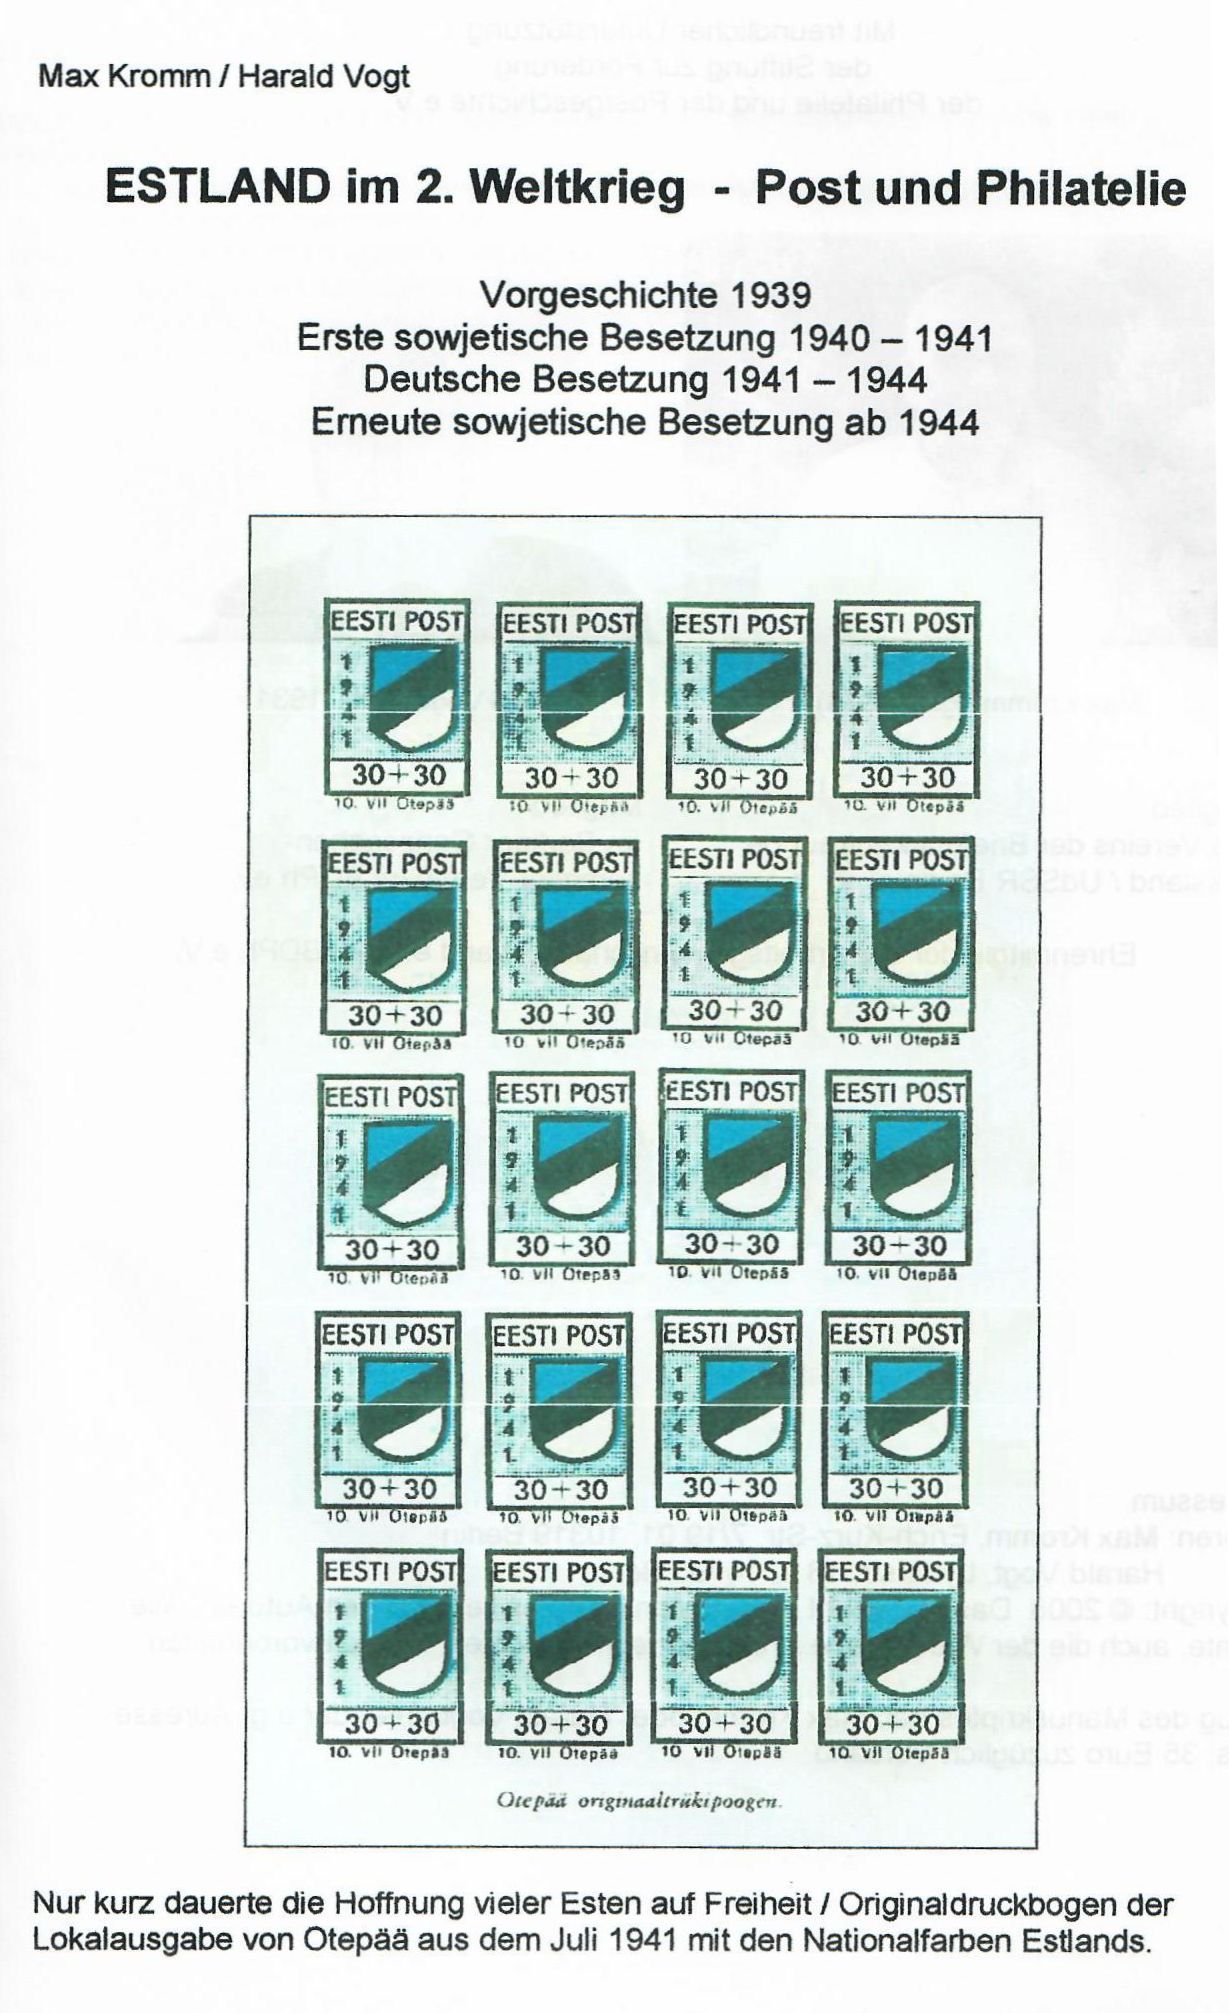 Estonia in World War II